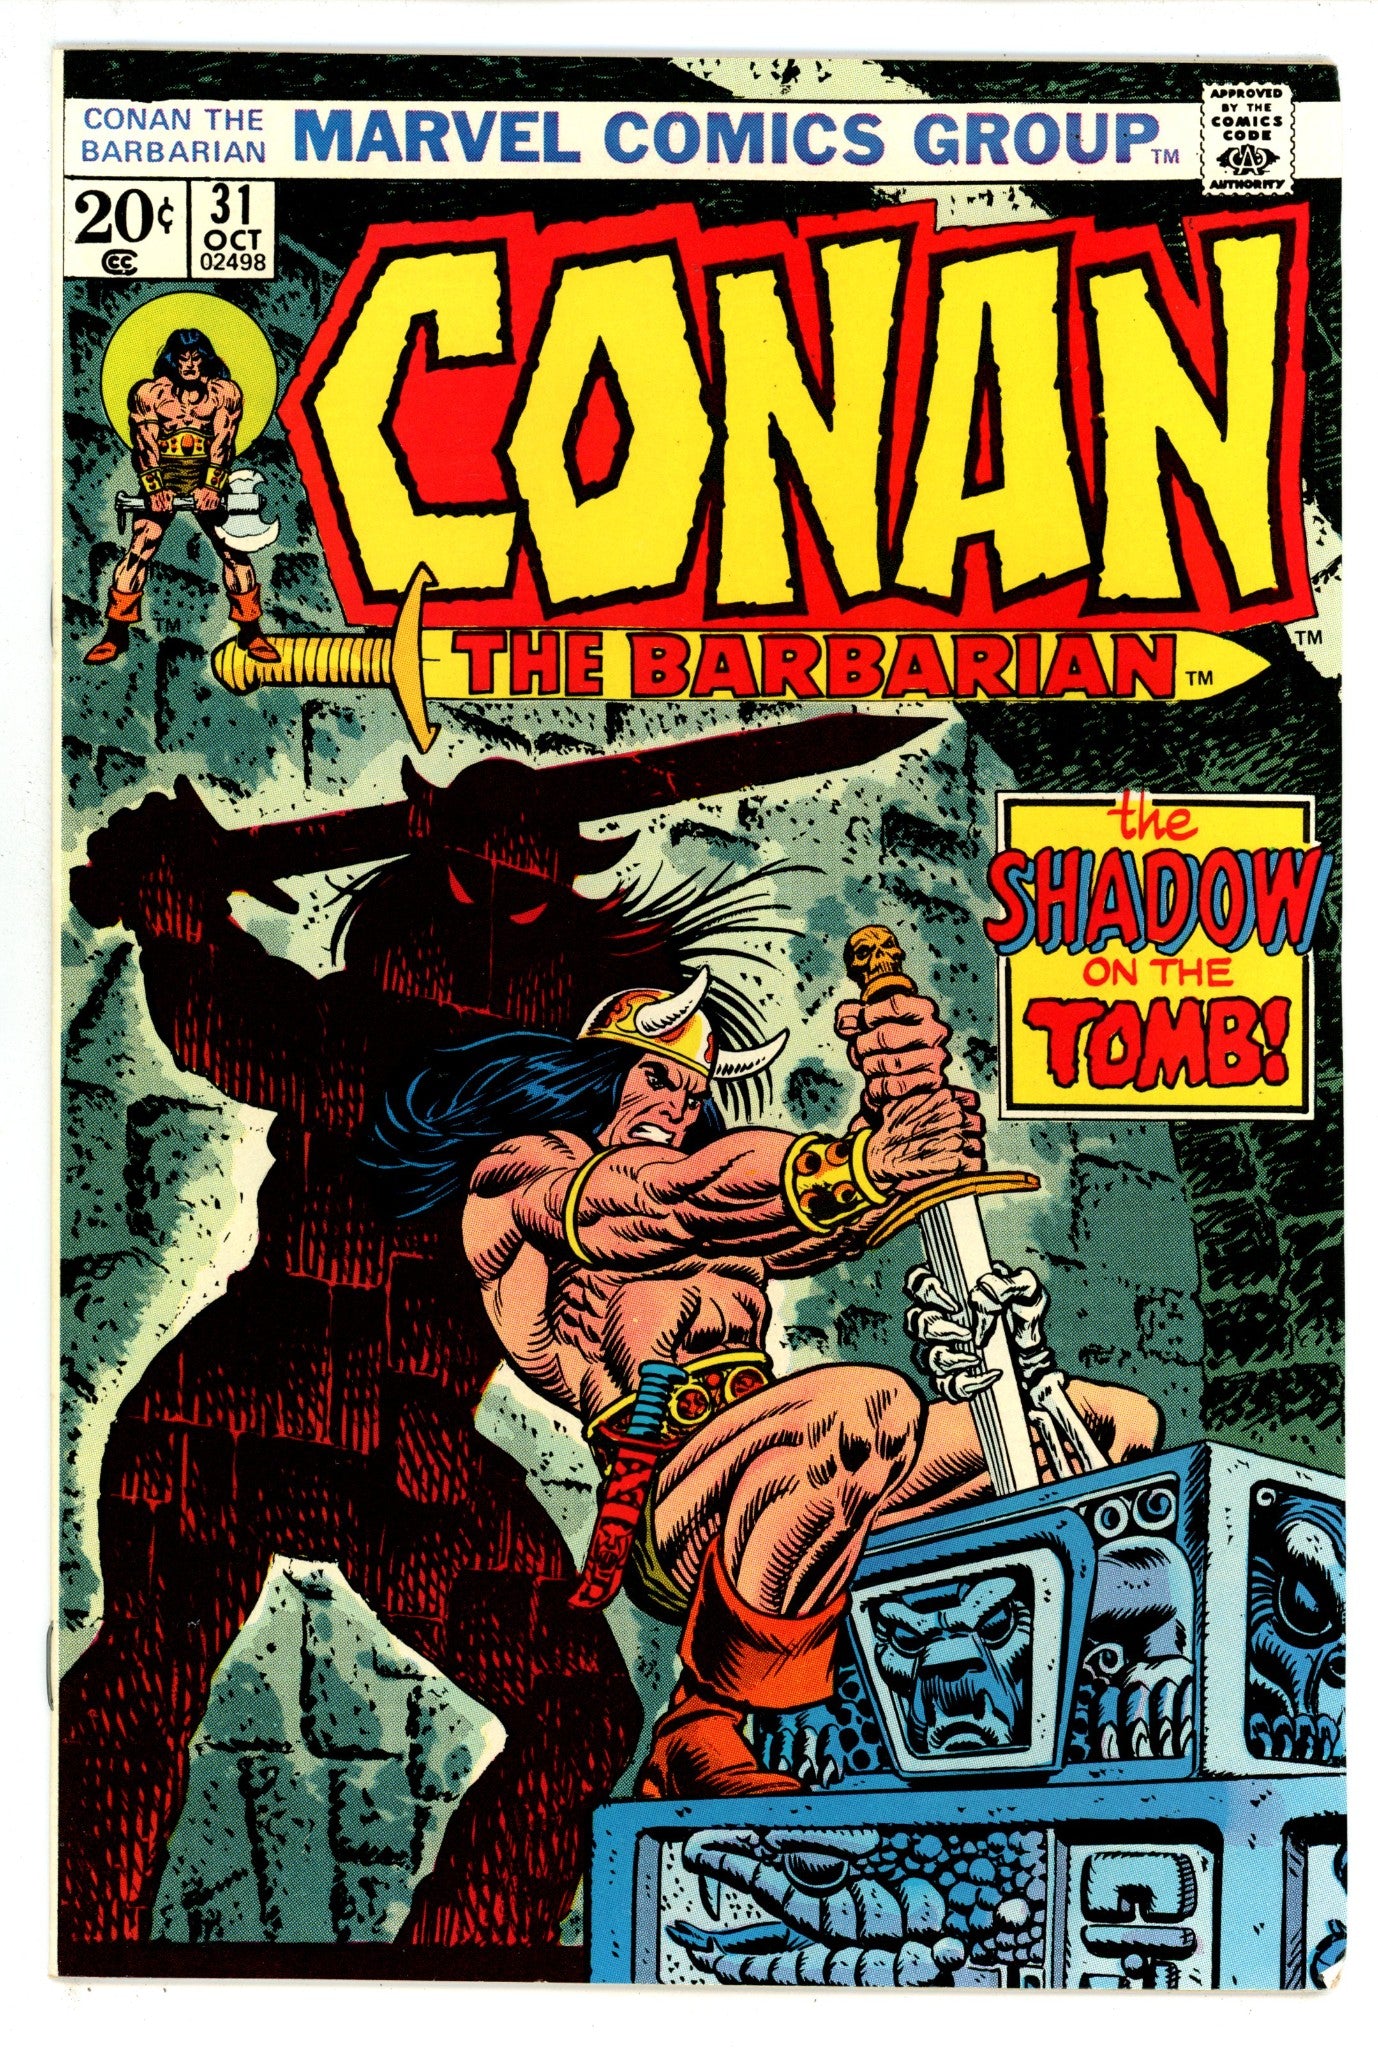 Conan the Barbarian Vol 1 31 FN/VF (7.0) (1973) 